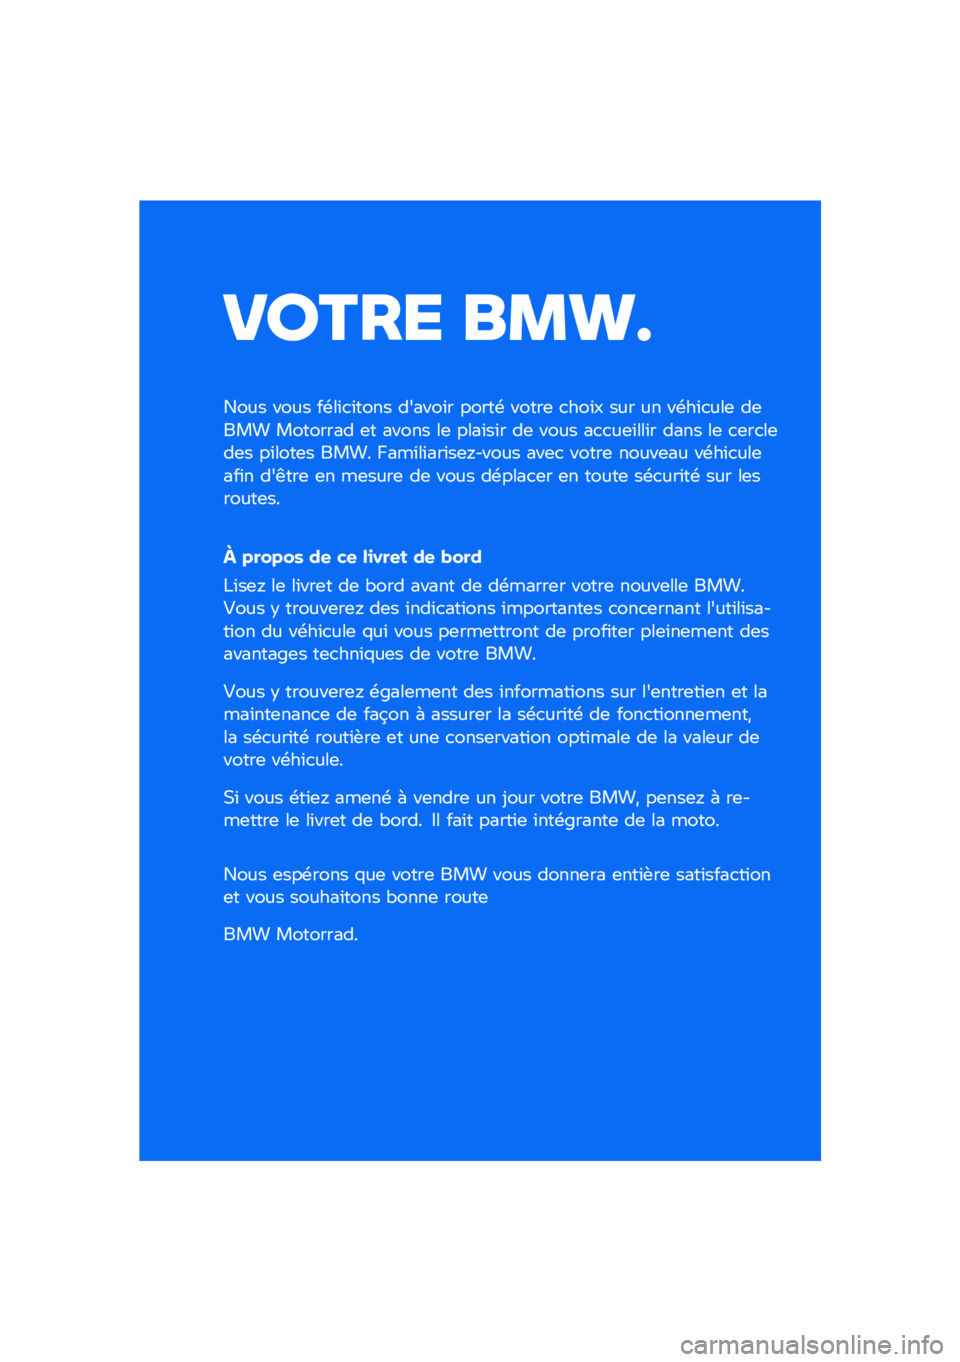 BMW MOTORRAD R NINE T SCRAMBLER 2020  Livret de bord (in French) ����� ��\b�	�

���� ���� ��\b��\f�
�\f���� ������\f� �����\b �����	 �
���\f� ��� �� ��\b��\f�
���	 ��	��� �������� �	� ����� ��	 ���